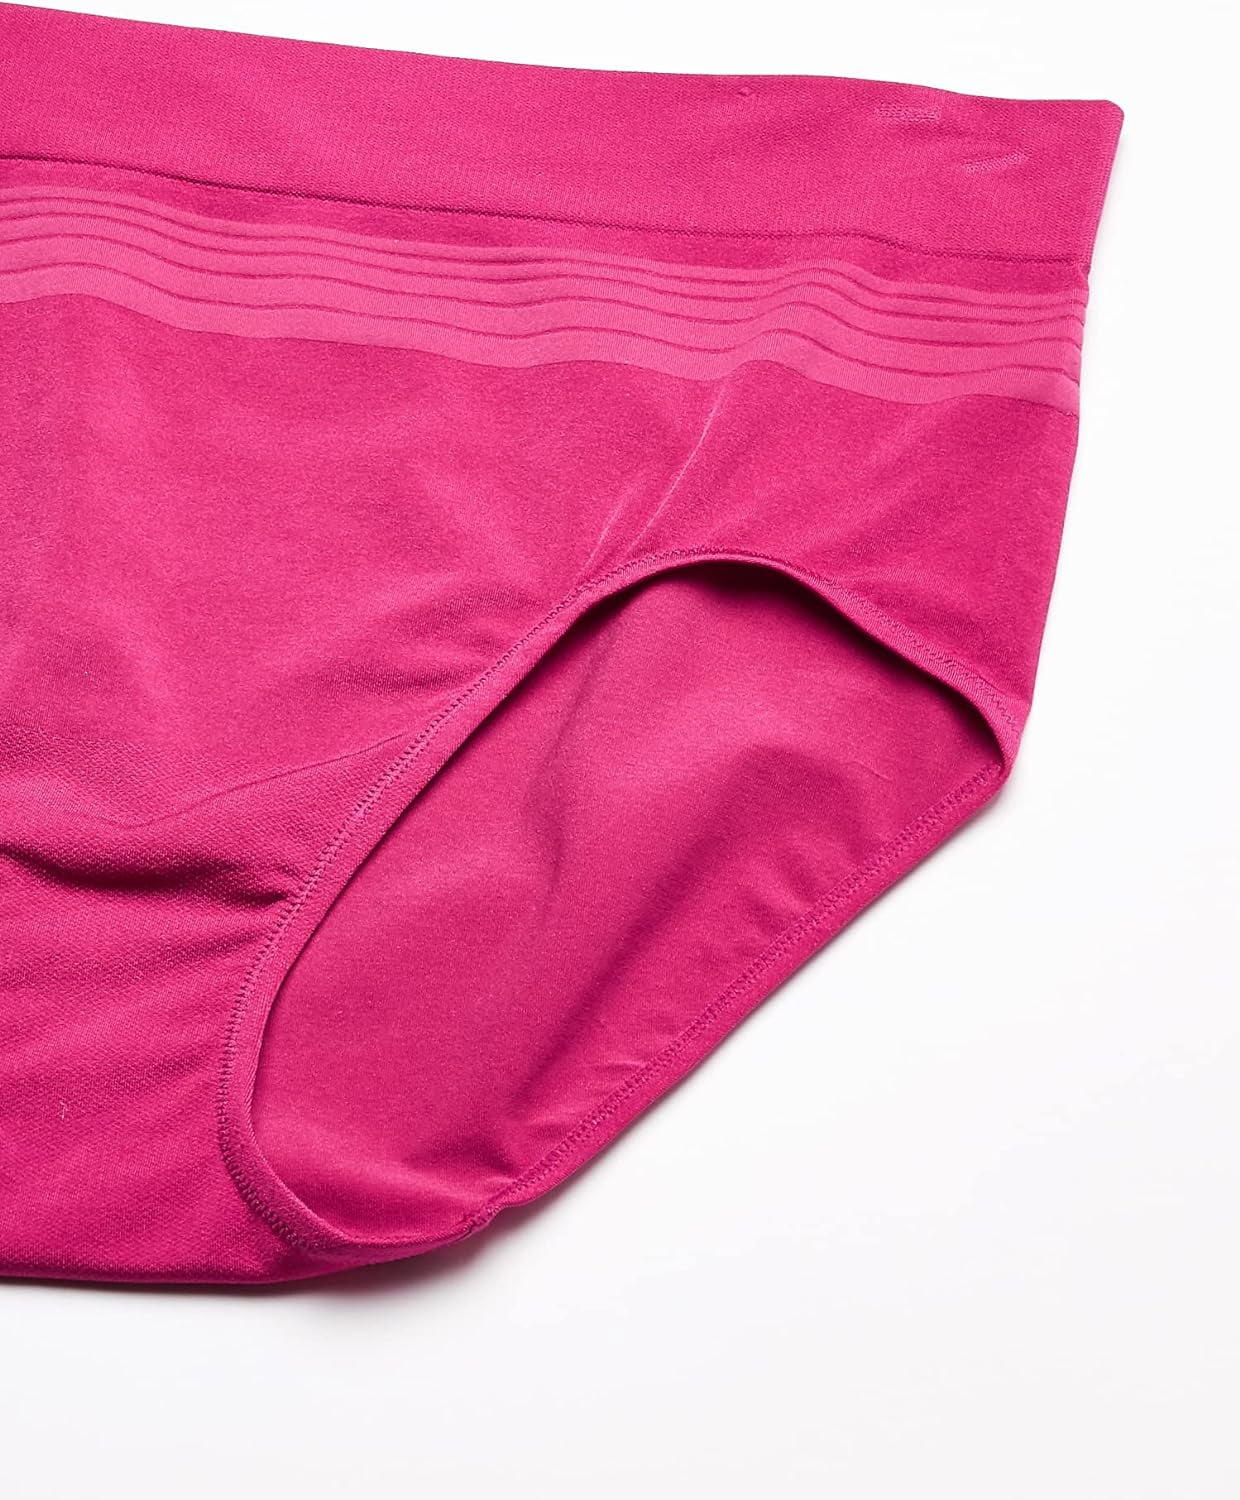 New Warner's No Muffin Top Seamless Briefs Panties Women's